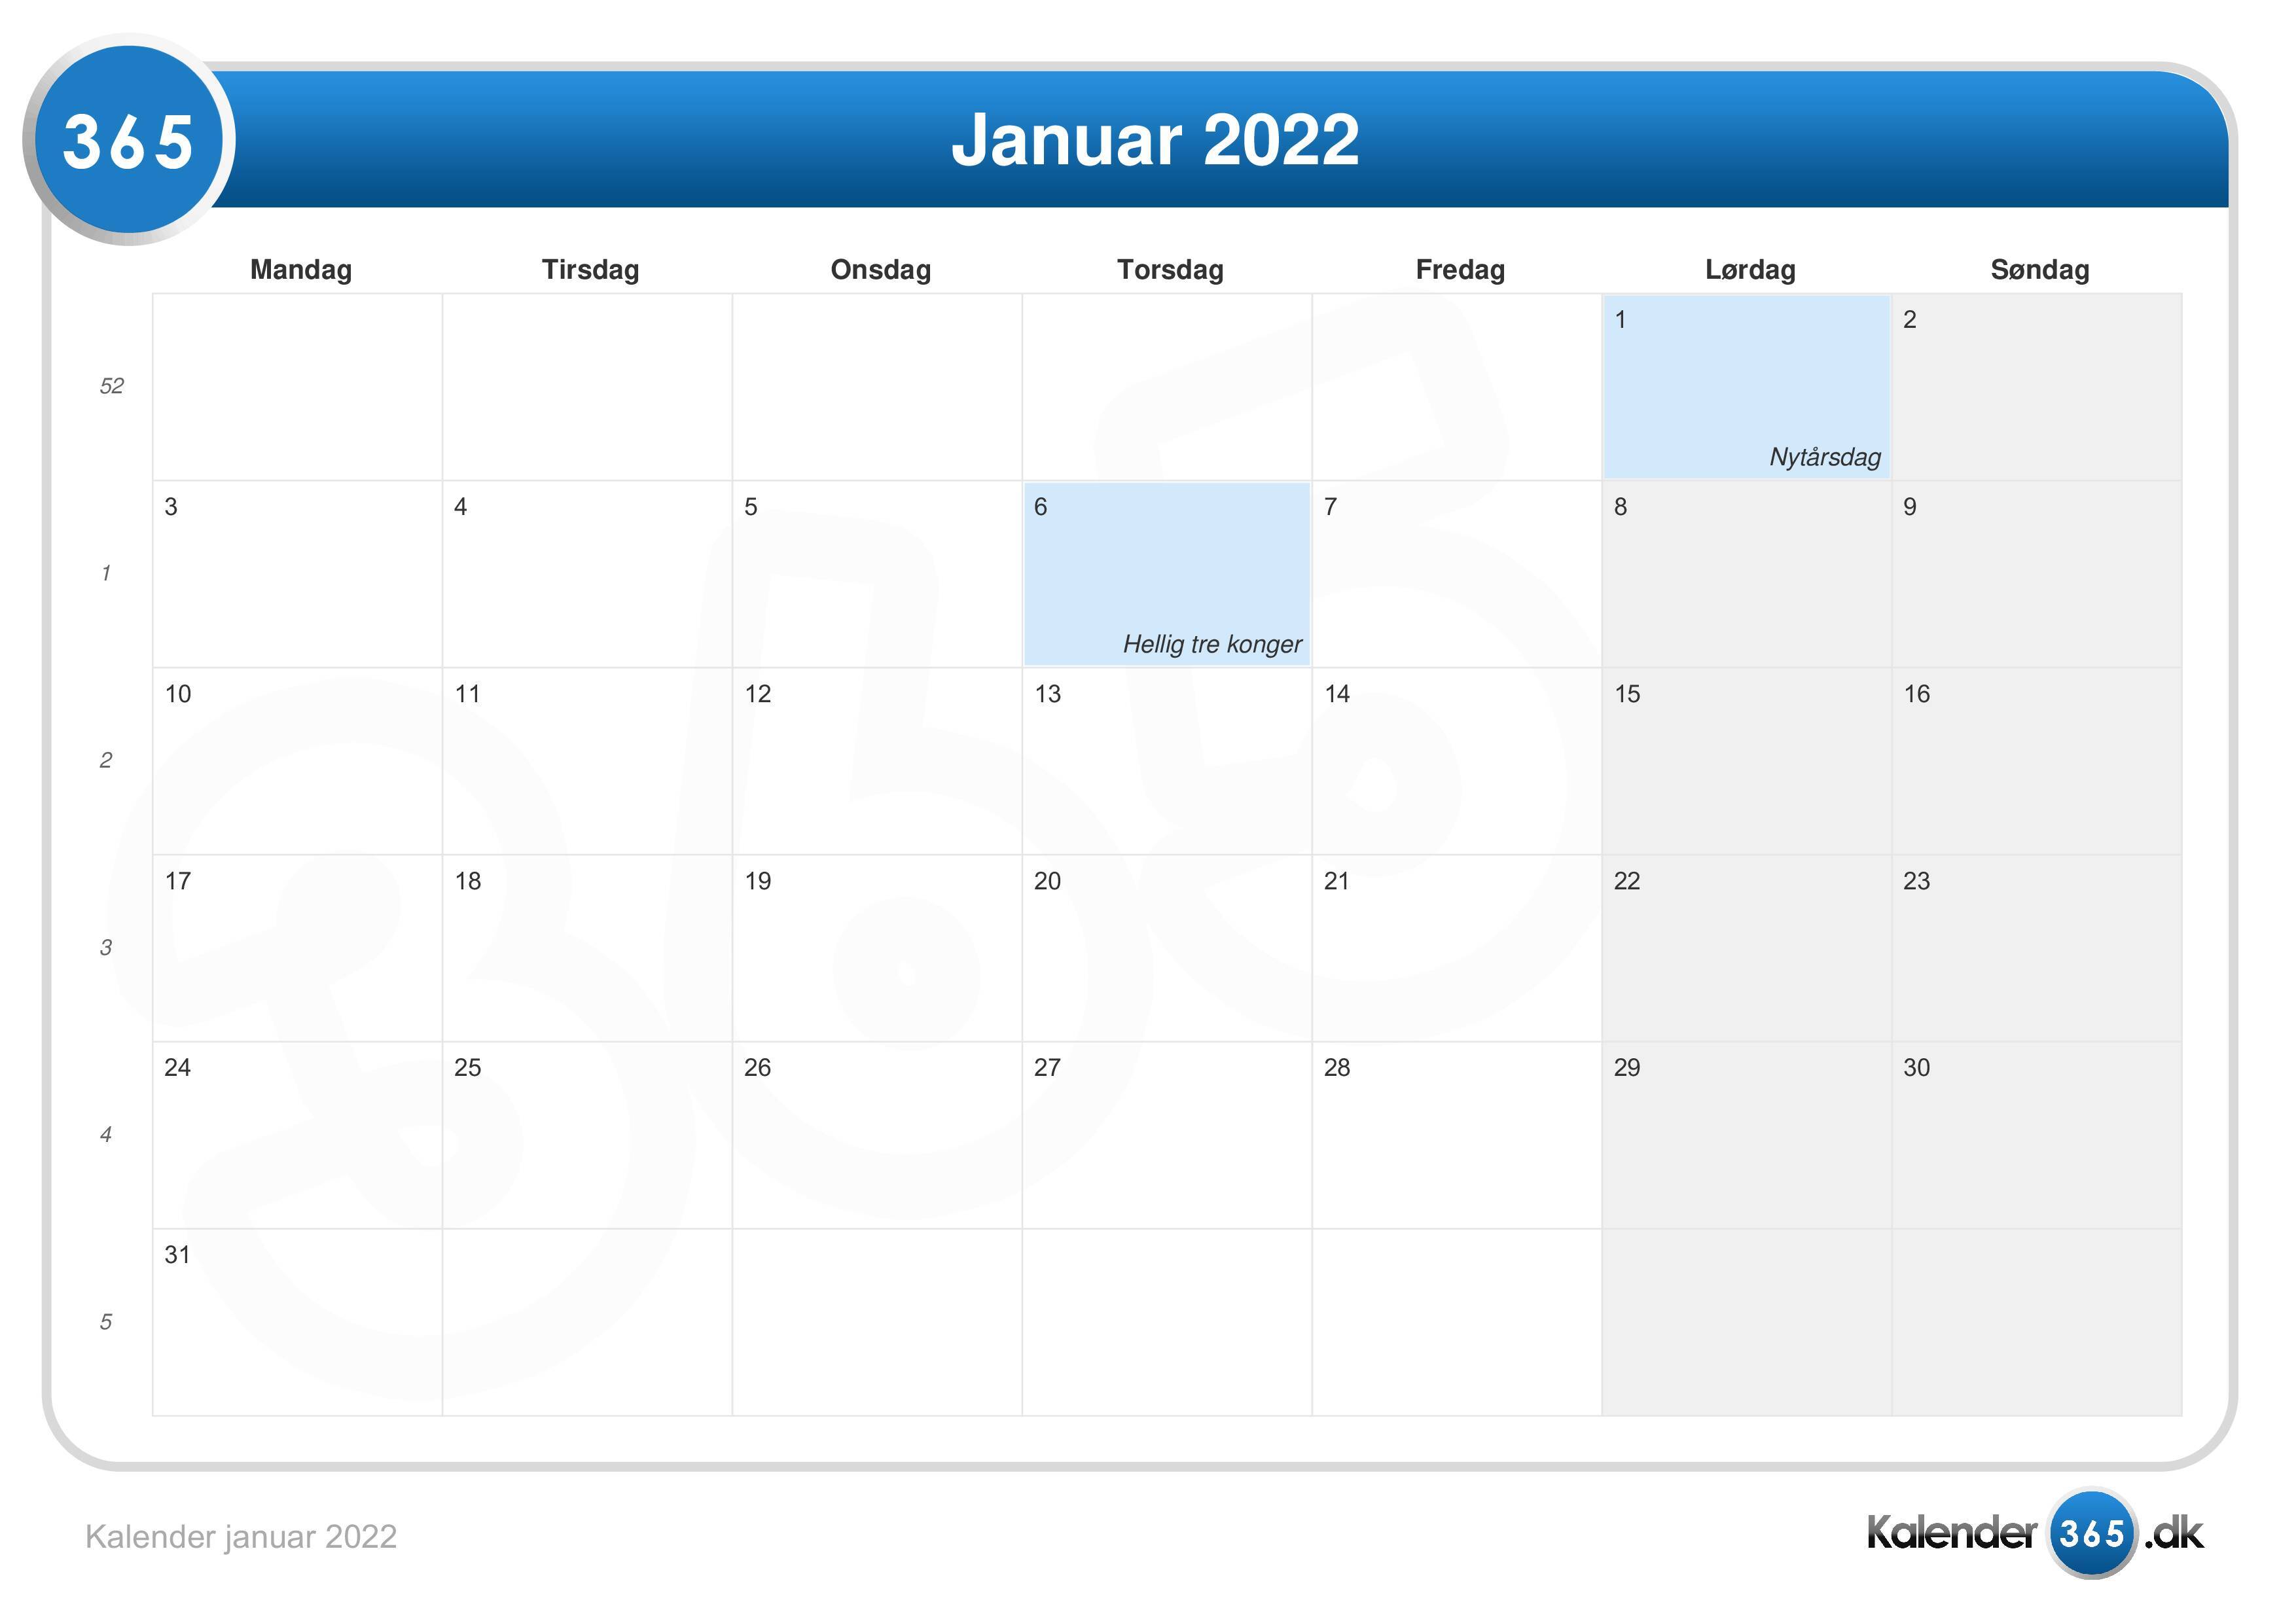  Kalender januar 2022 